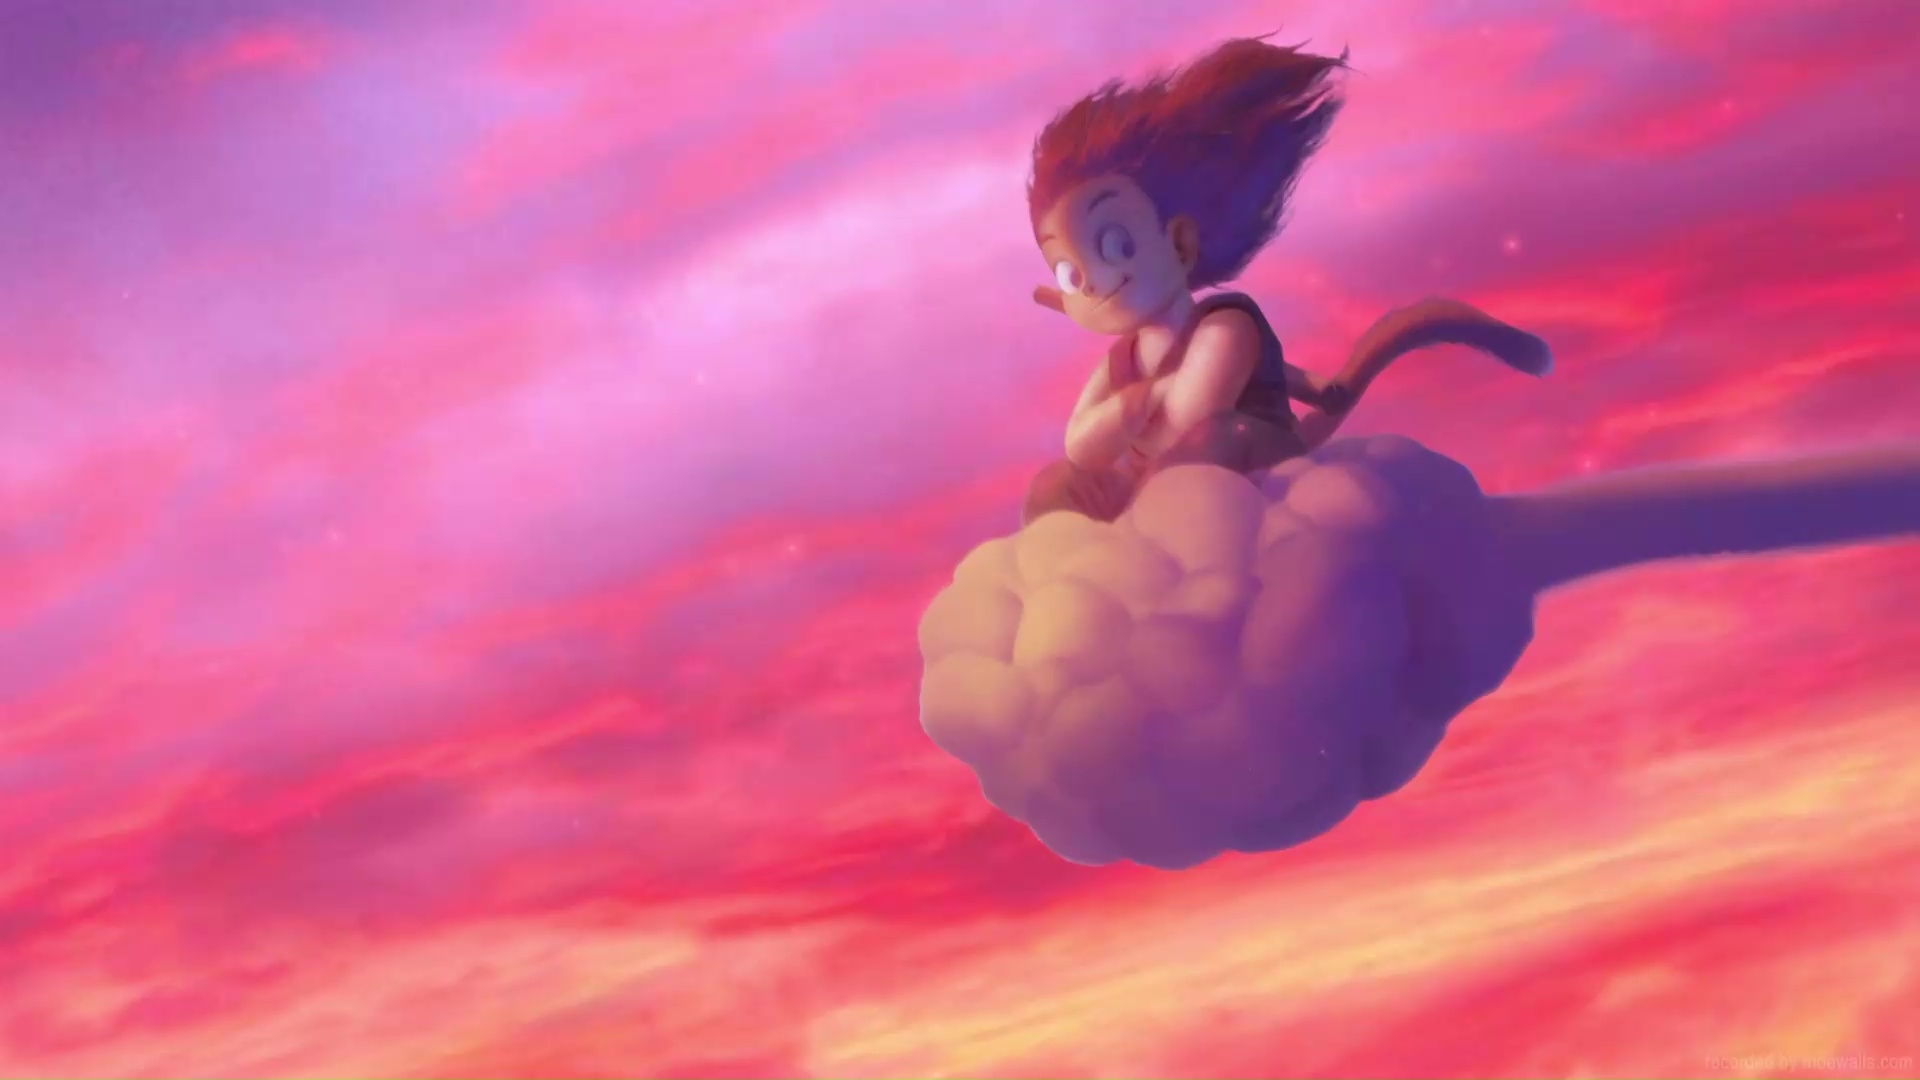 Steam WorkshopDragon Ball  Son Goku Flying Nimbus  Kame House  Dragon  Ball Z  Island  Audio Reactive  Digital Art  2K